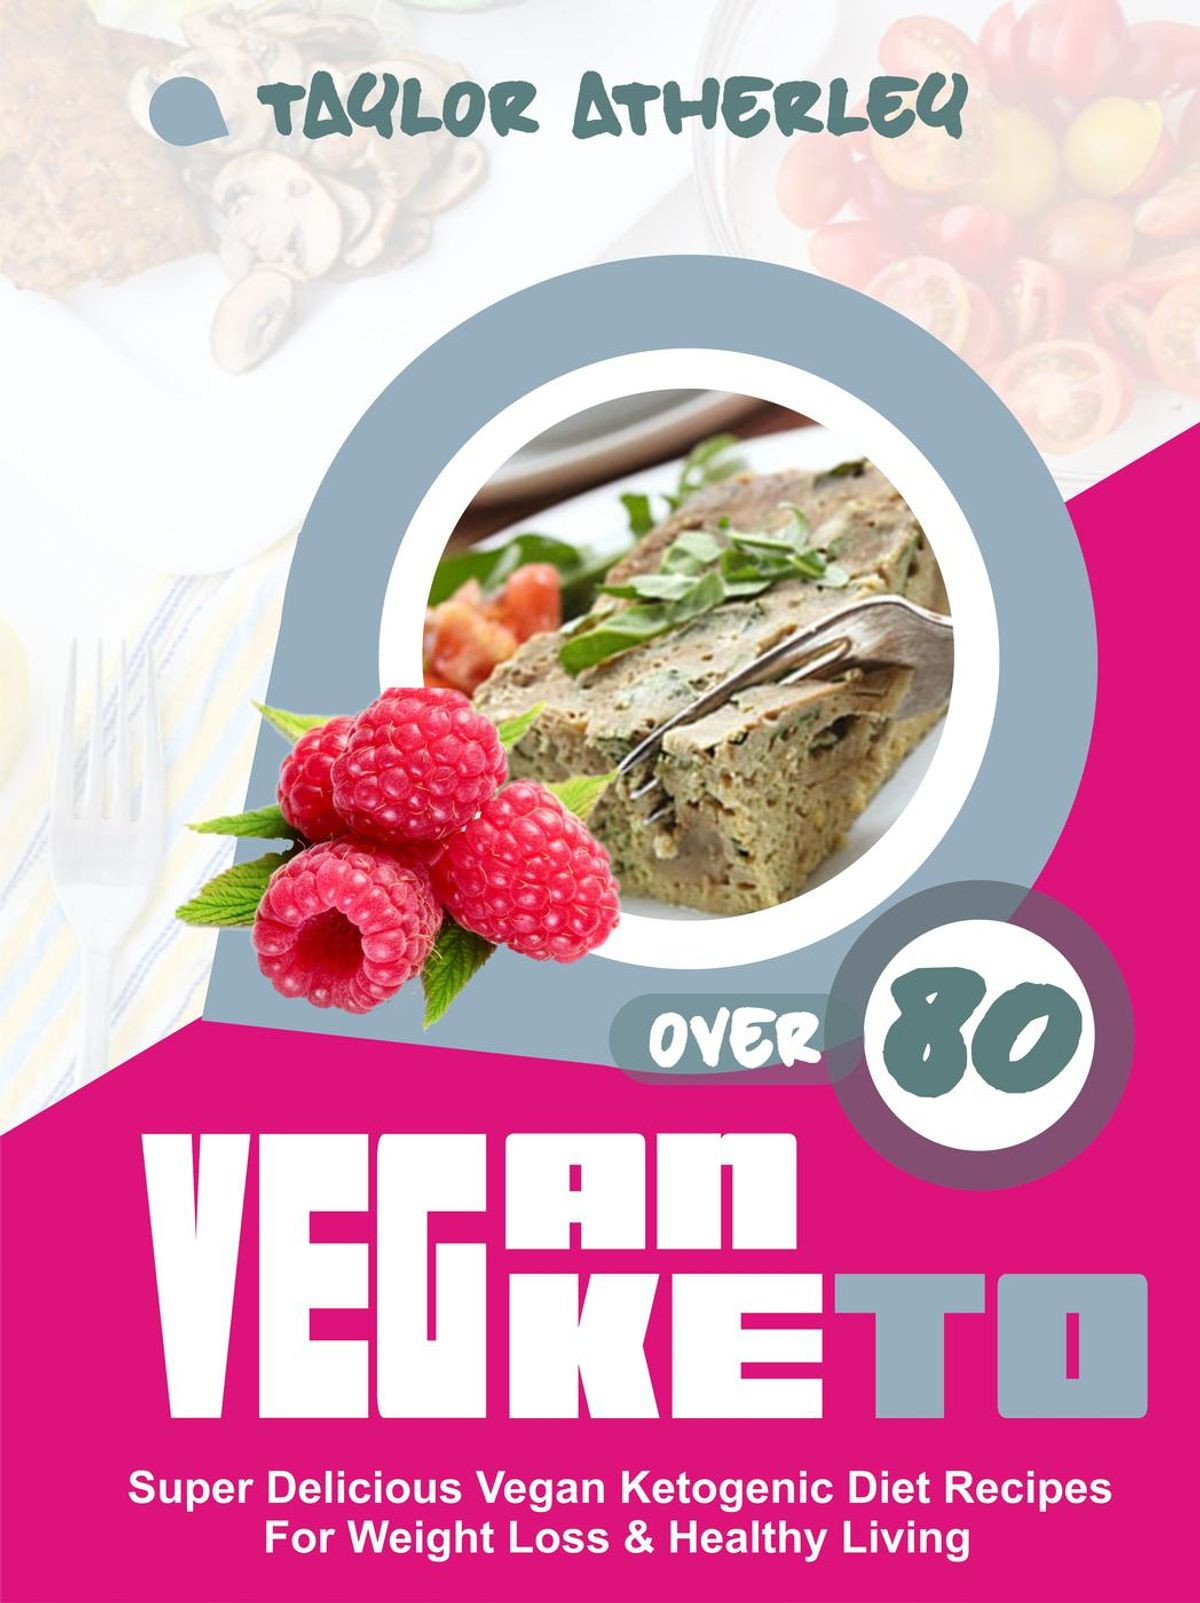 Vegan Keto Recipes Ketogenic Diet
 Vegan Keto 80 Super Delicious Vegan Ketogenic Diet